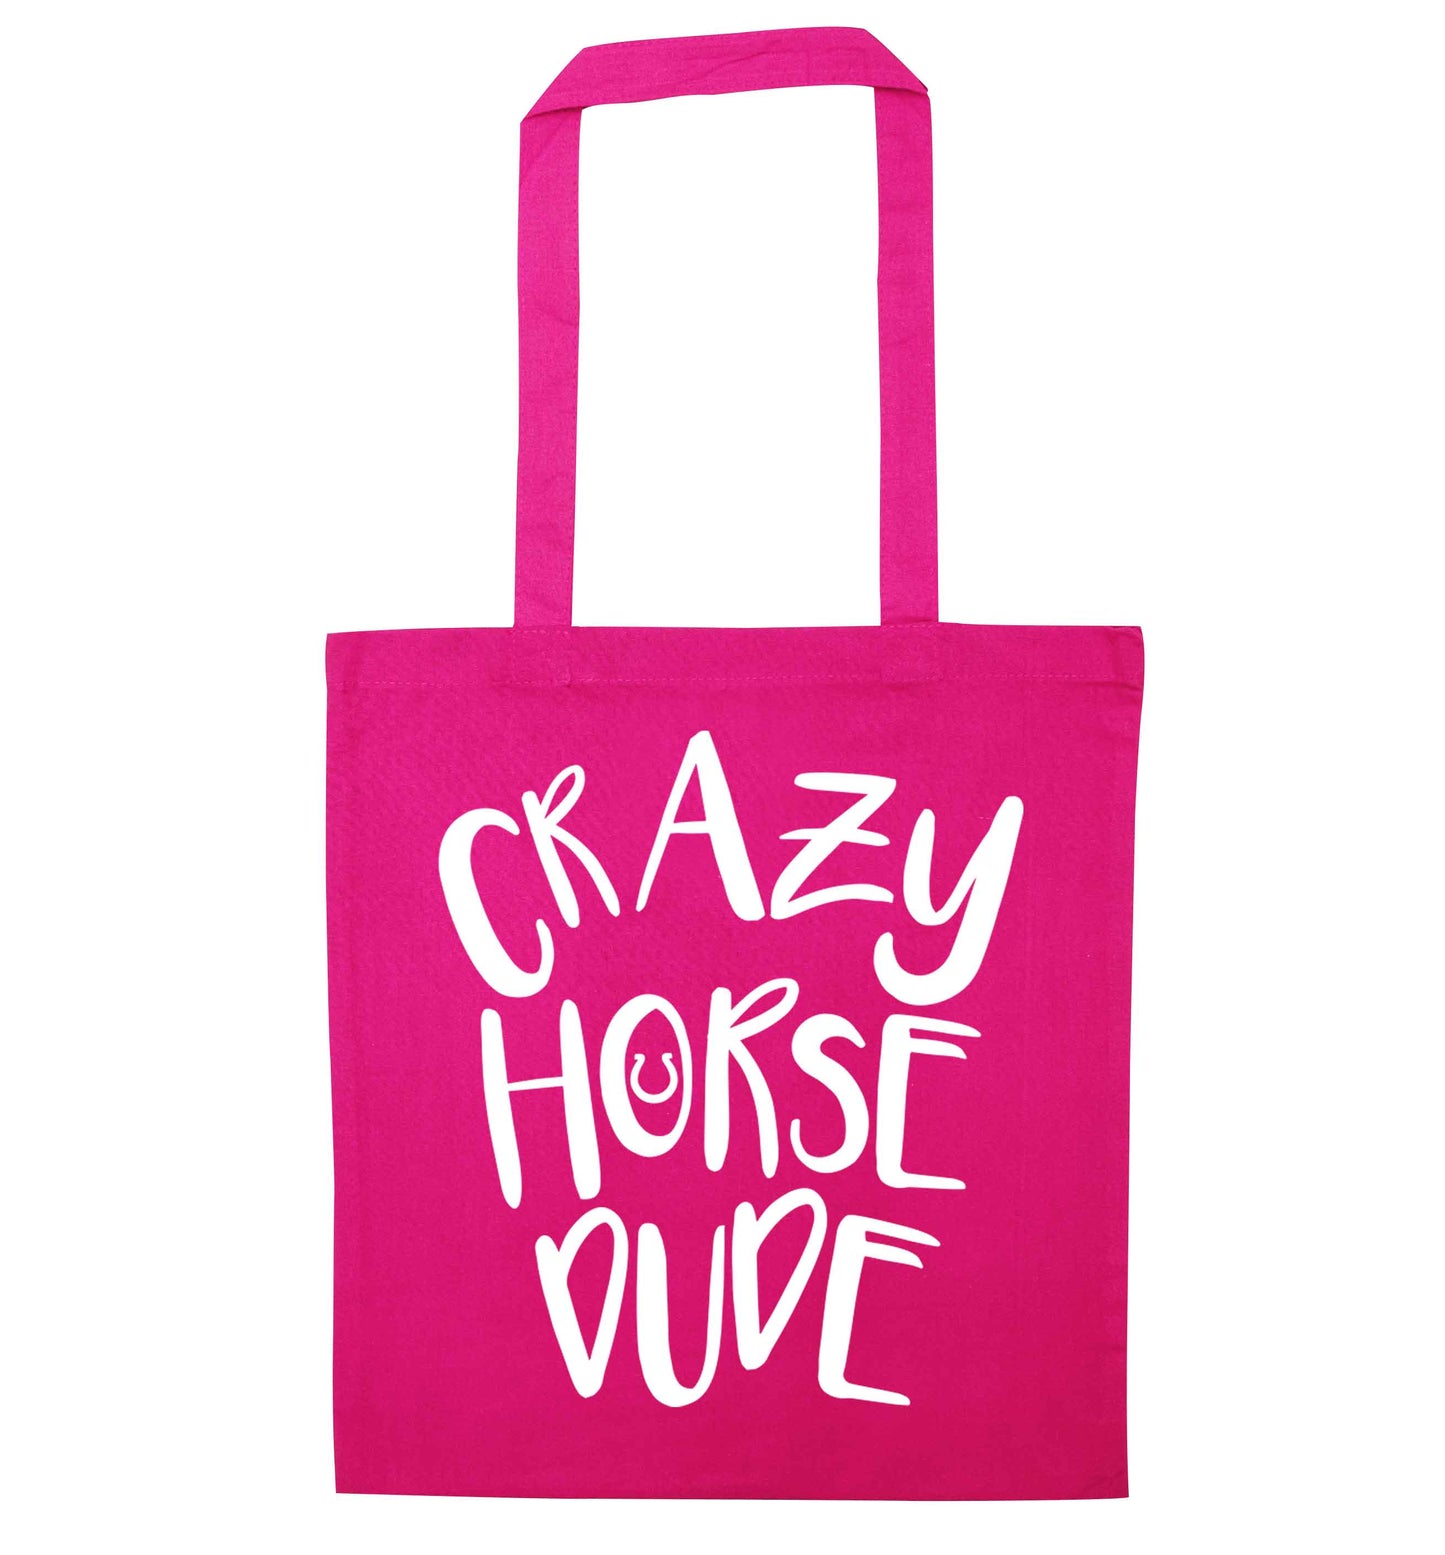 Crazy horse dude pink tote bag